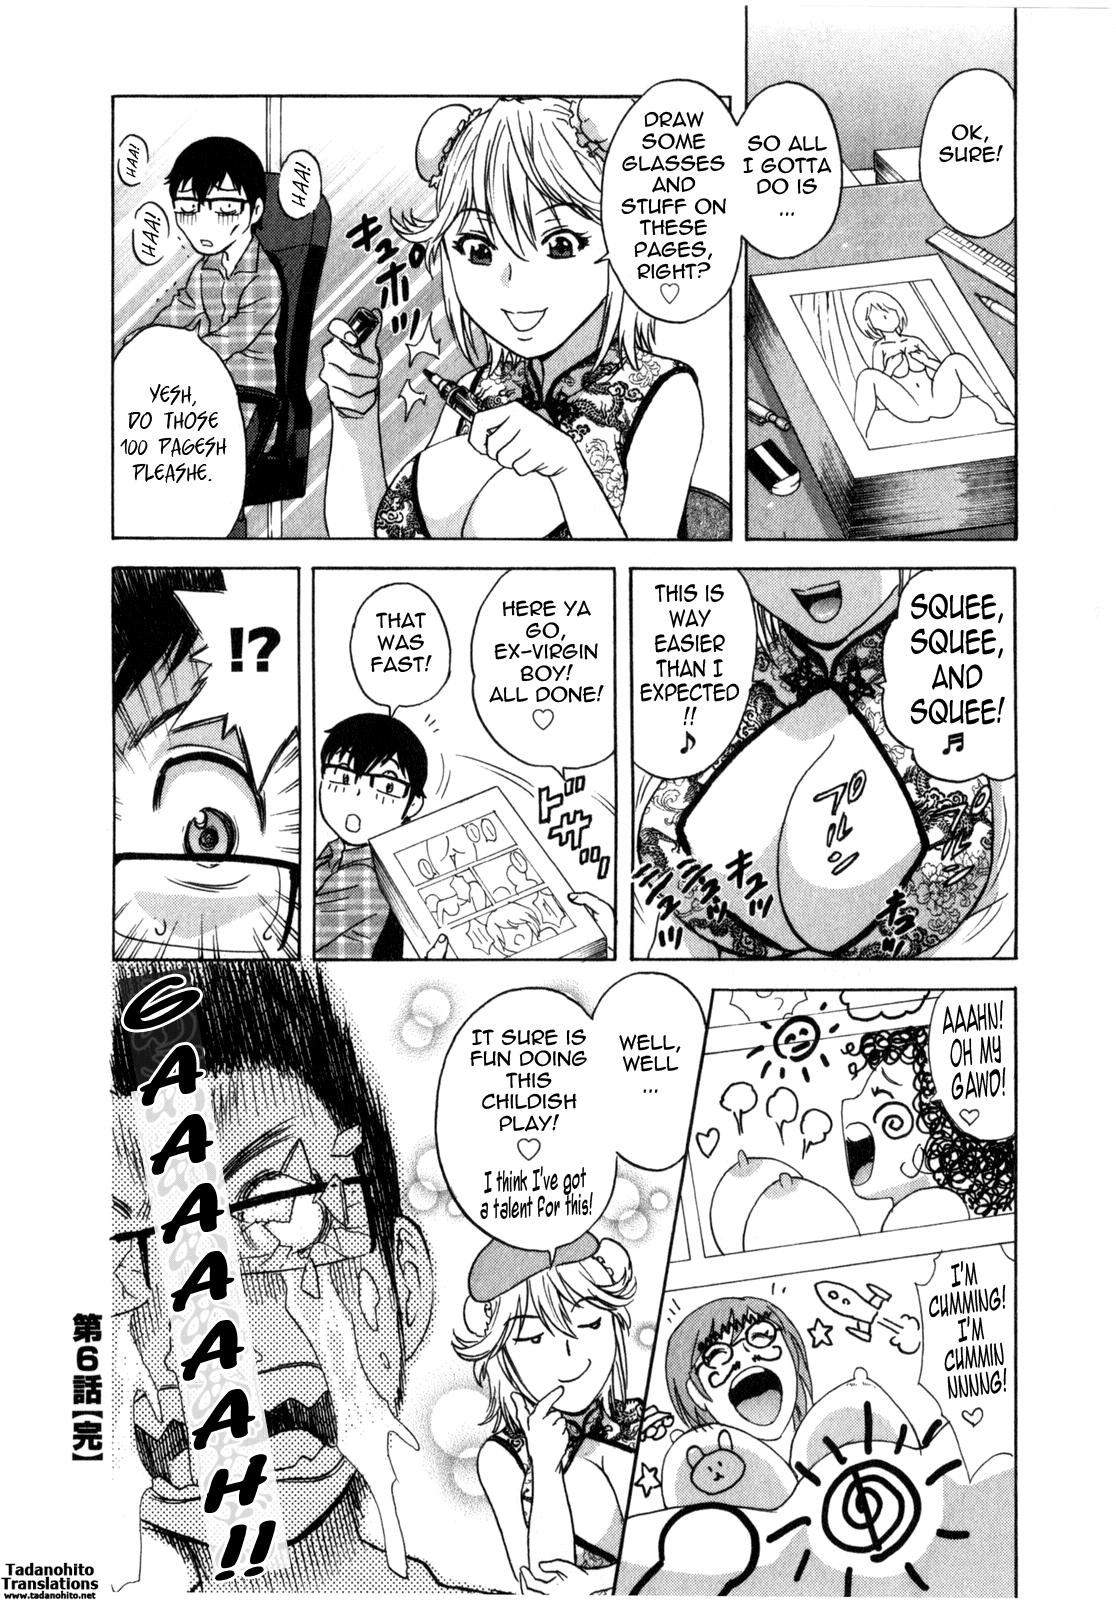 Life with Married Women Just Like a Manga 3 117